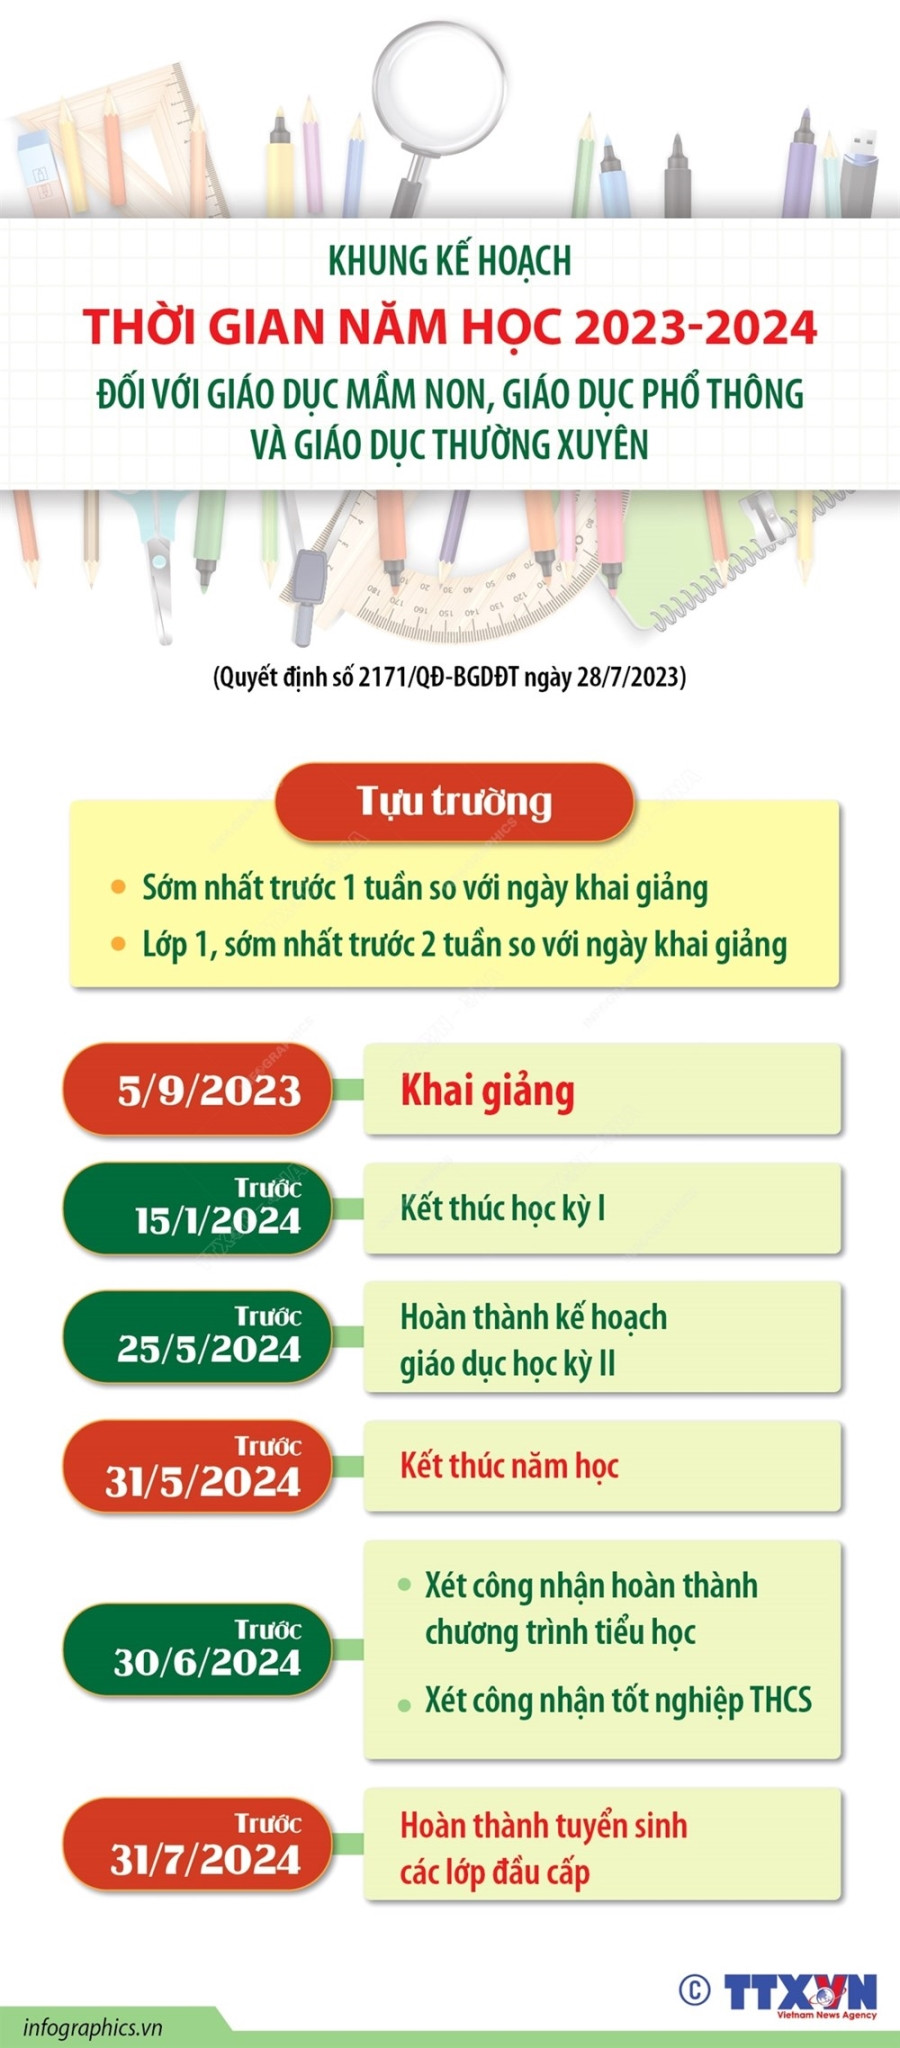 [Infographics] Ban hanh Khung ke hoach thoi gian nam hoc 2023-2024 hinh anh 1